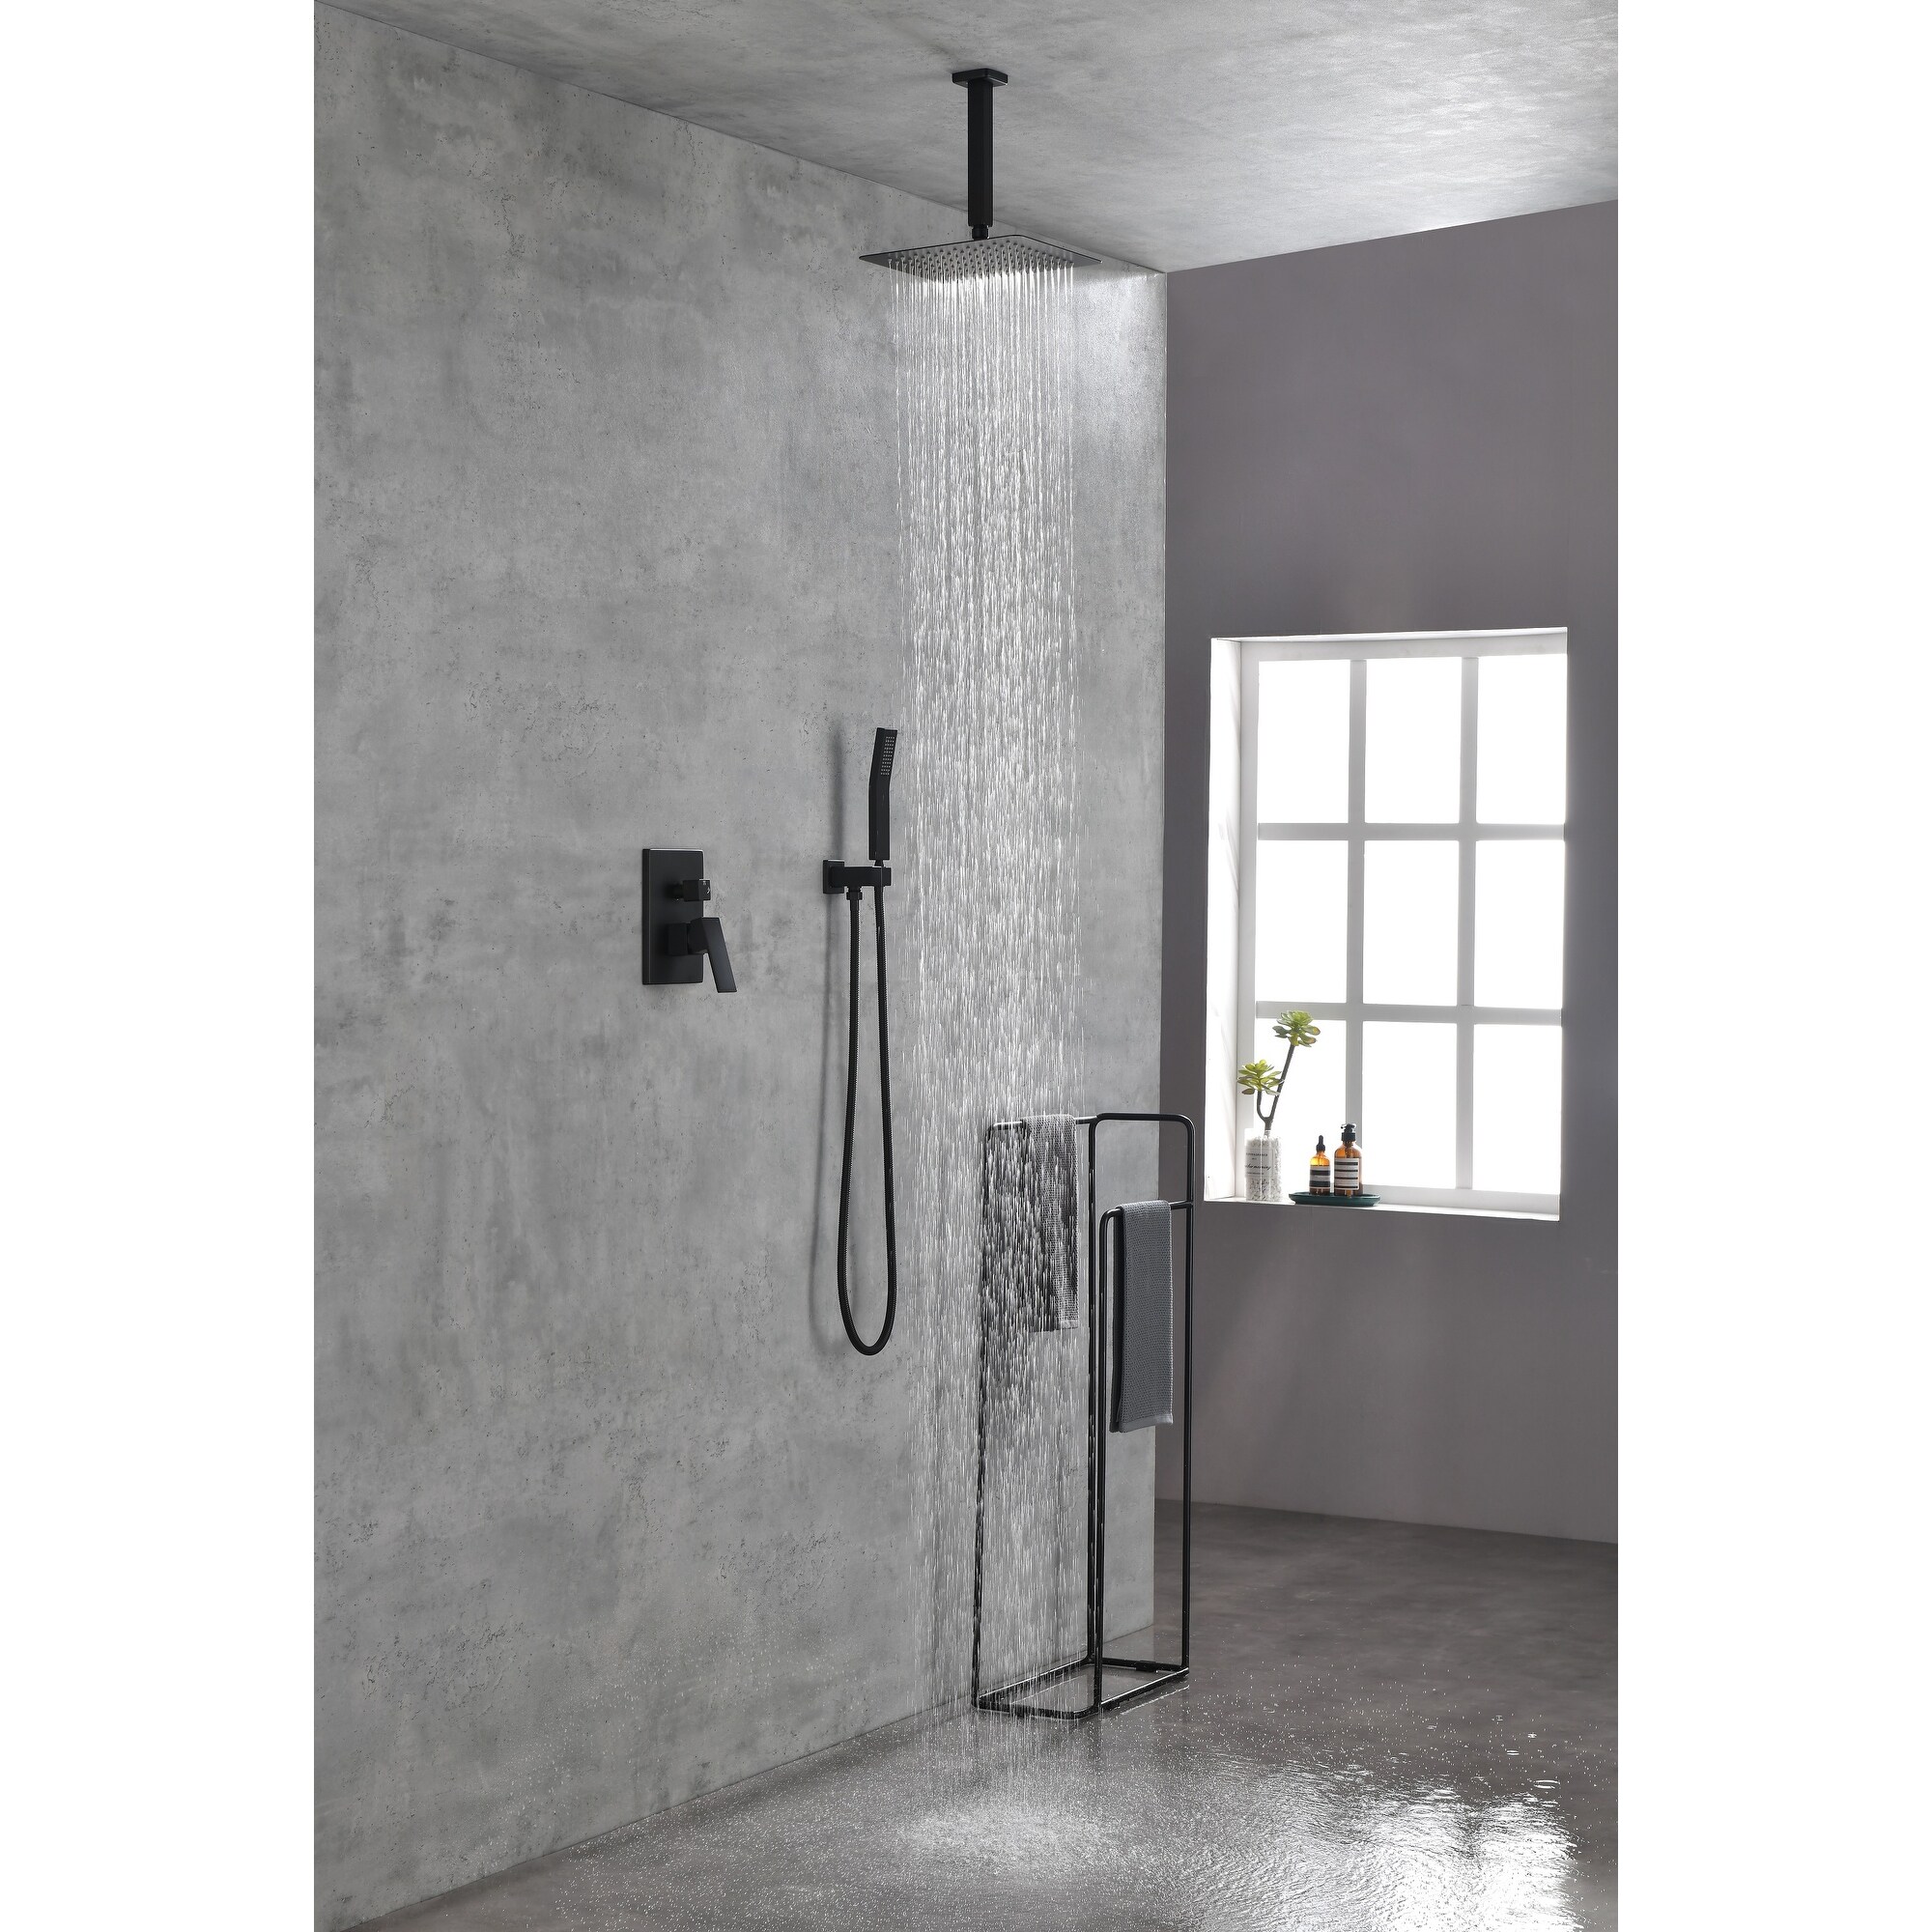 CTEX Shower Set System Bathroom Luxury Rain Mixer Shower Combo Set Ceiling Mounted Rainfall Shower Head Faucet